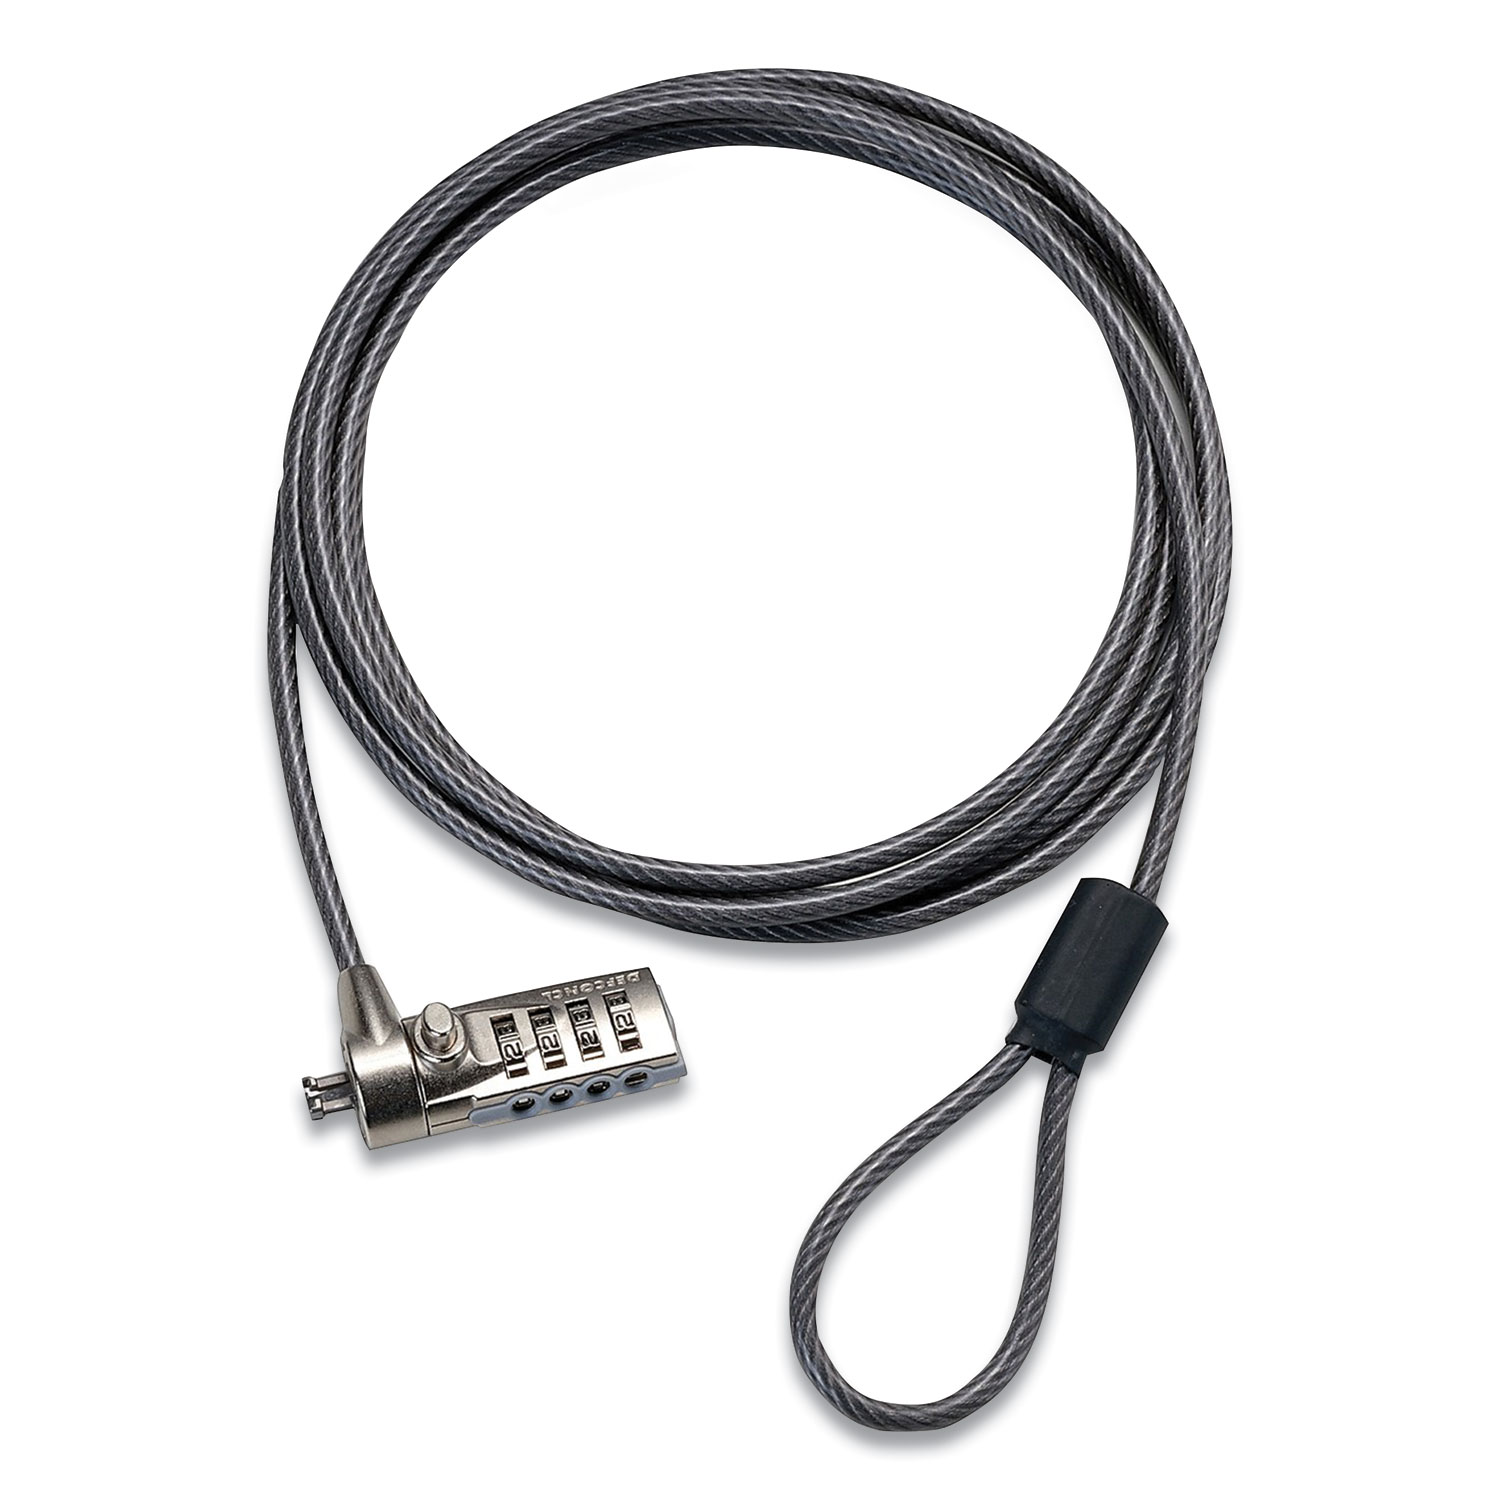  Targus PA410U1 DEFCON CL Cable Lock. 6.5 ft, Black (TRG857842) 